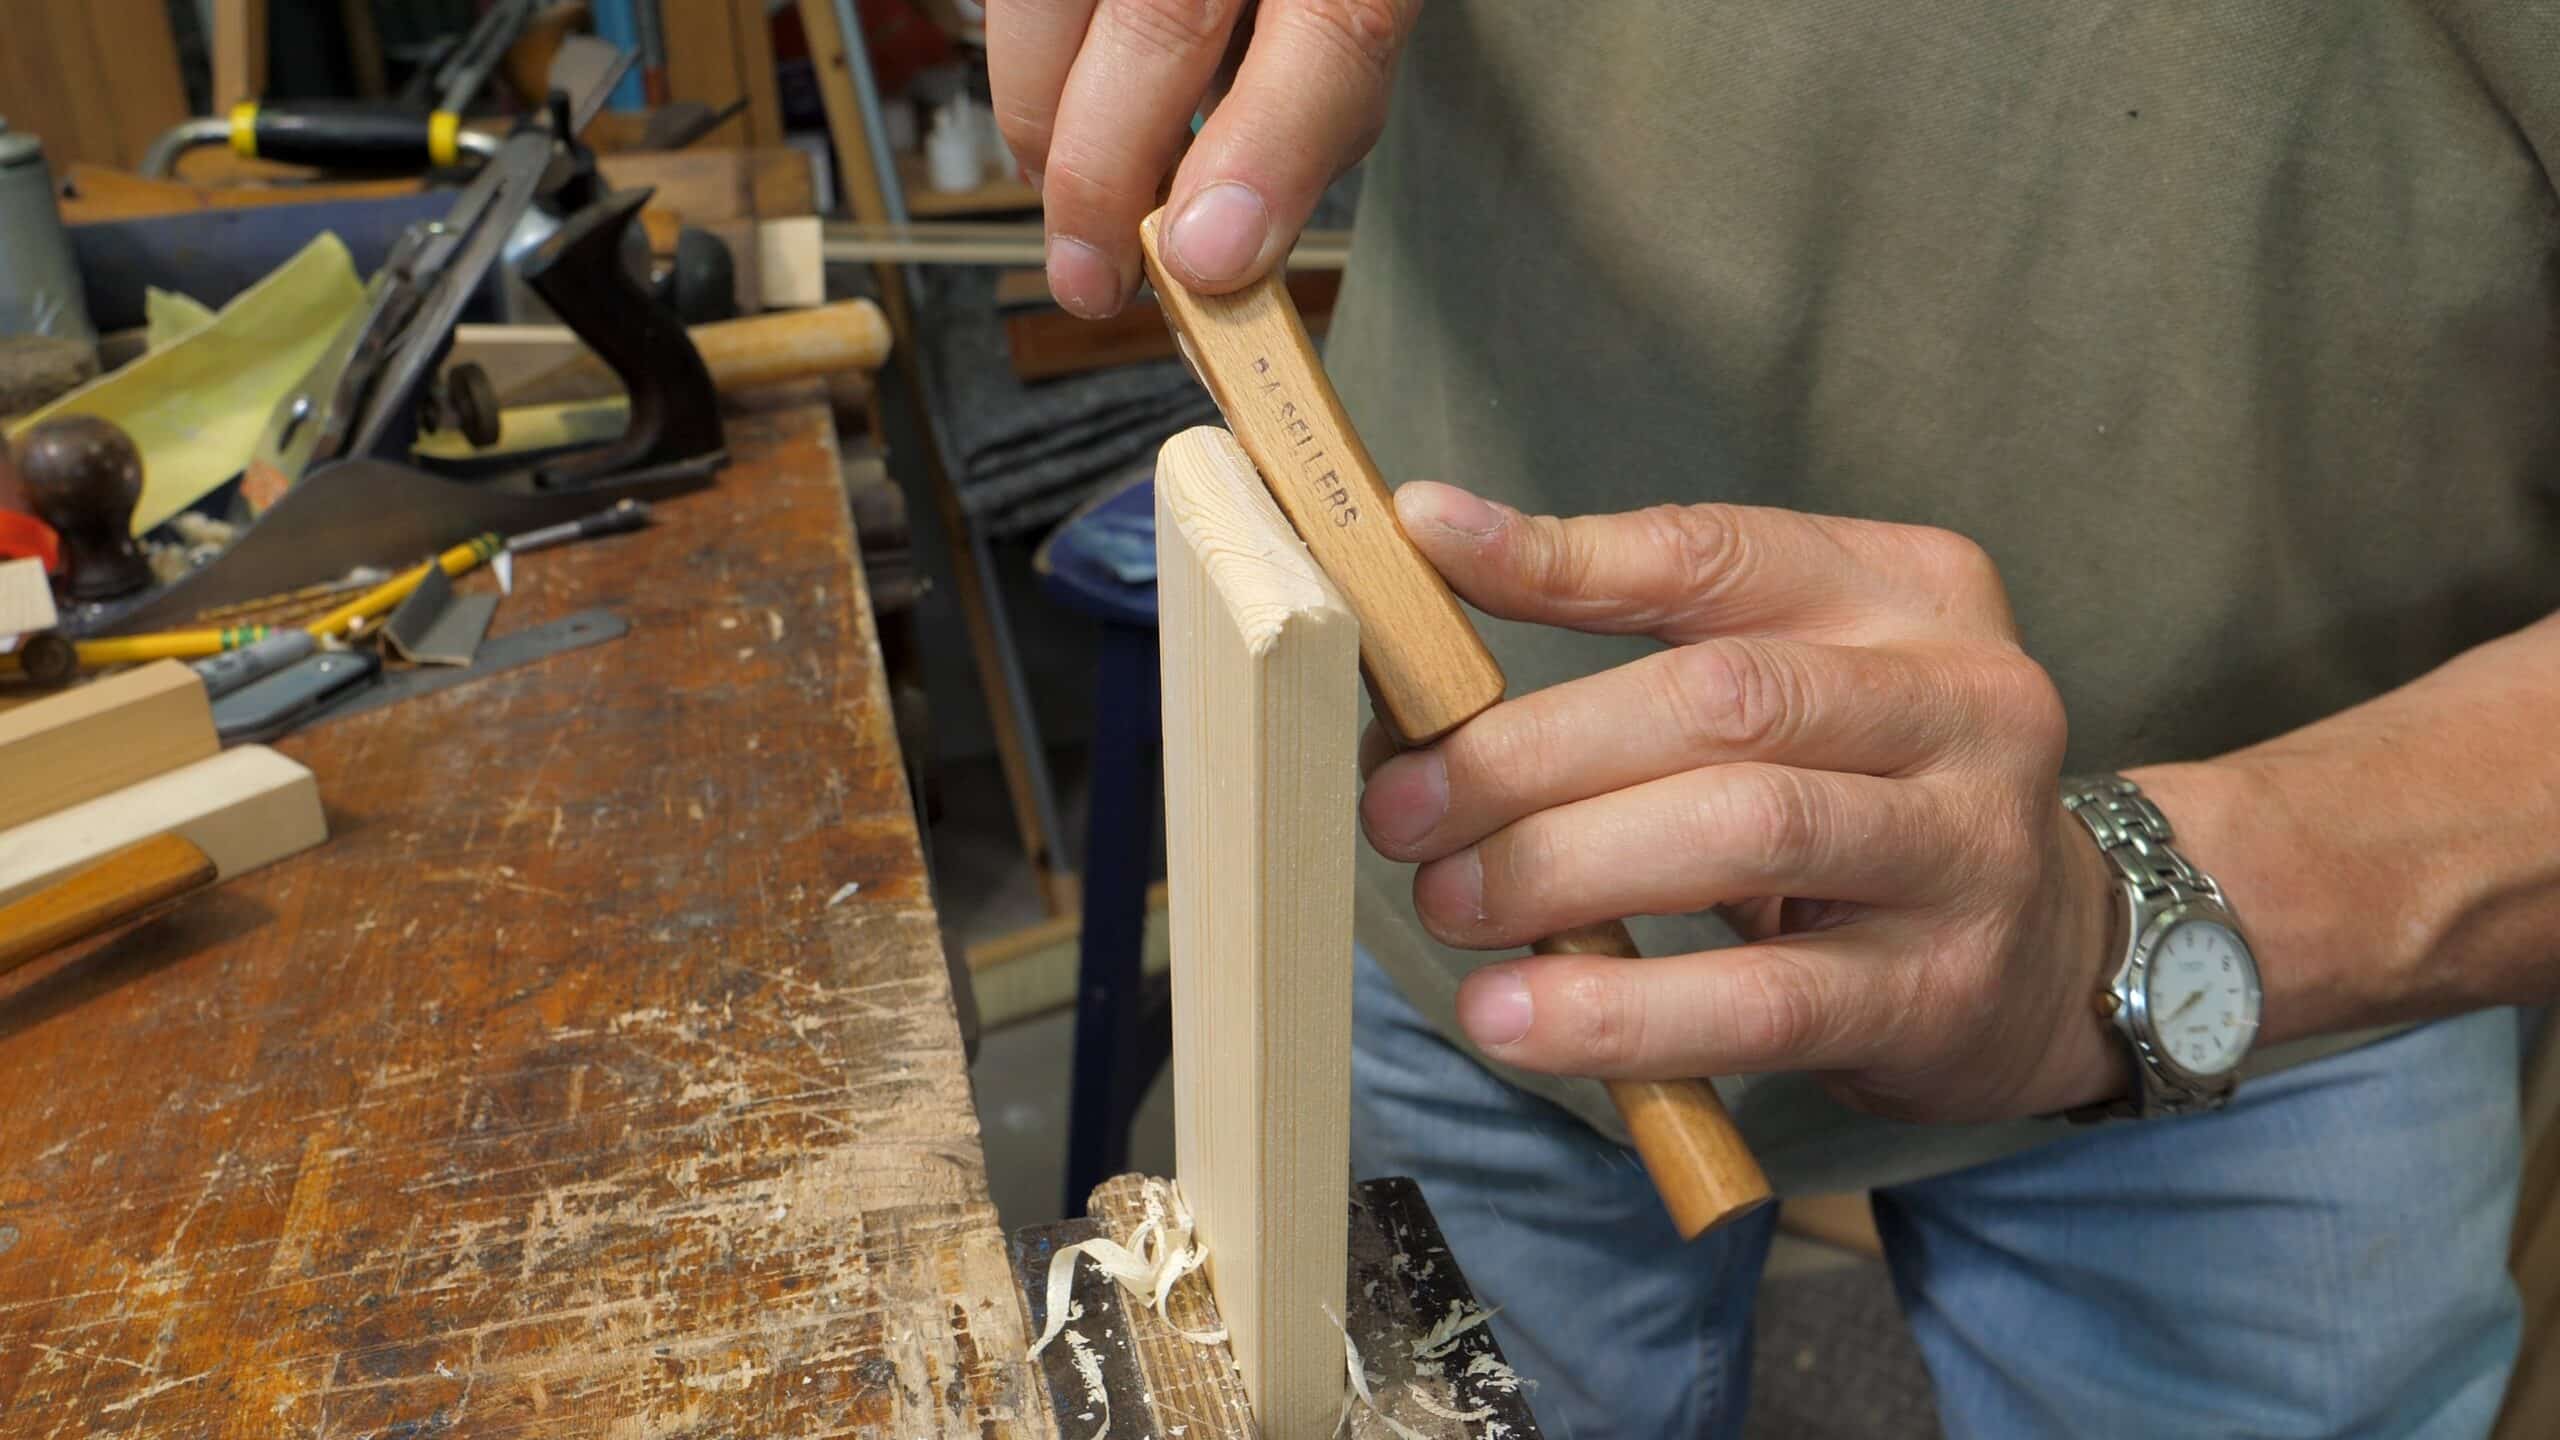 Ash & Co. Workshops Make-at-Home Woodworking Kits